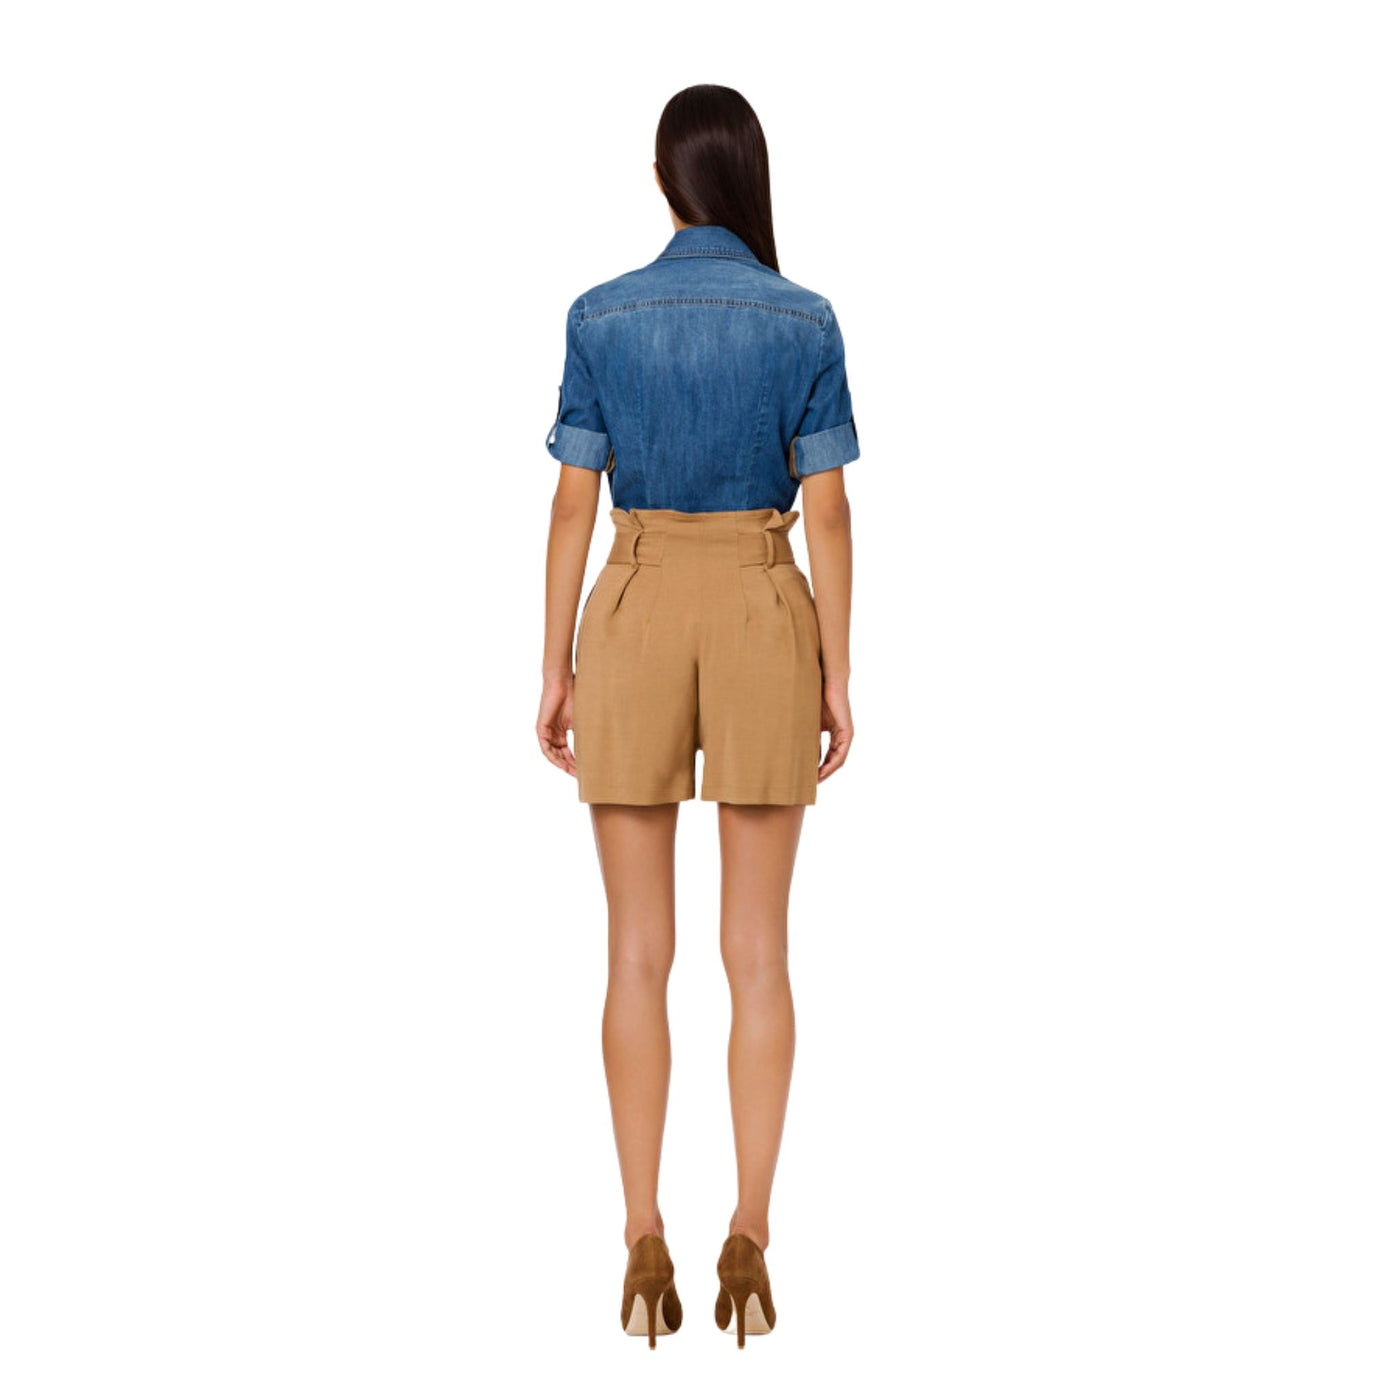 Women's short-sleeved jeans shirt